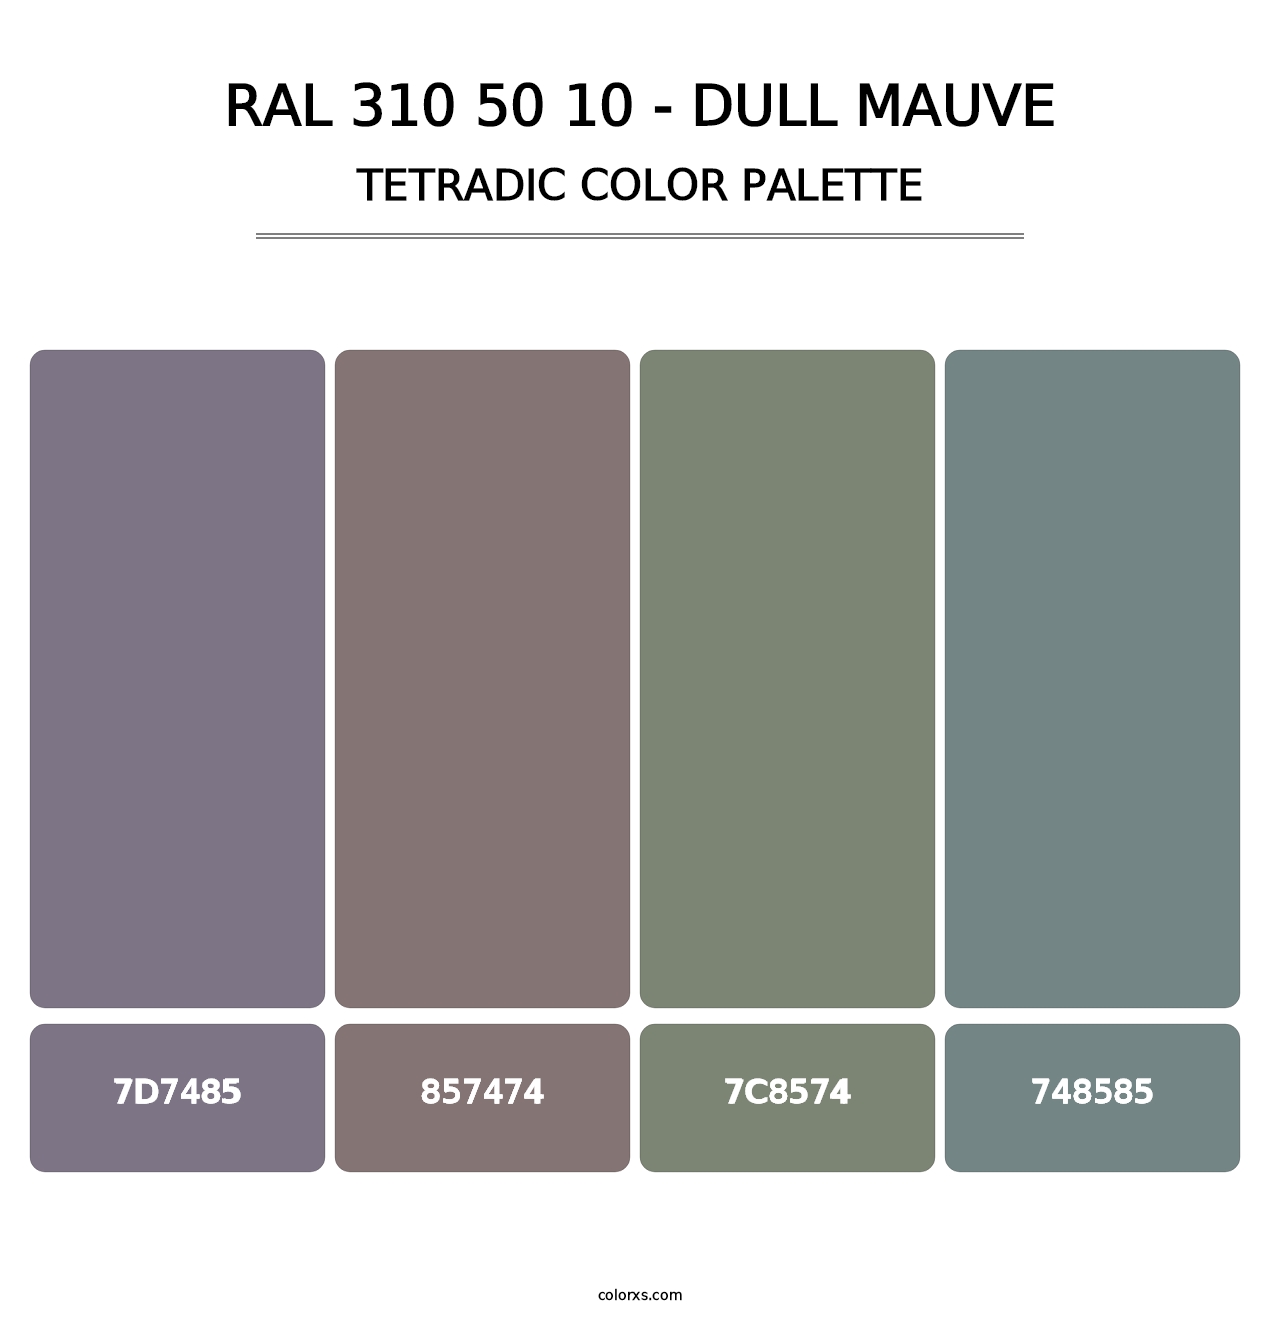 RAL 310 50 10 - Dull Mauve - Tetradic Color Palette